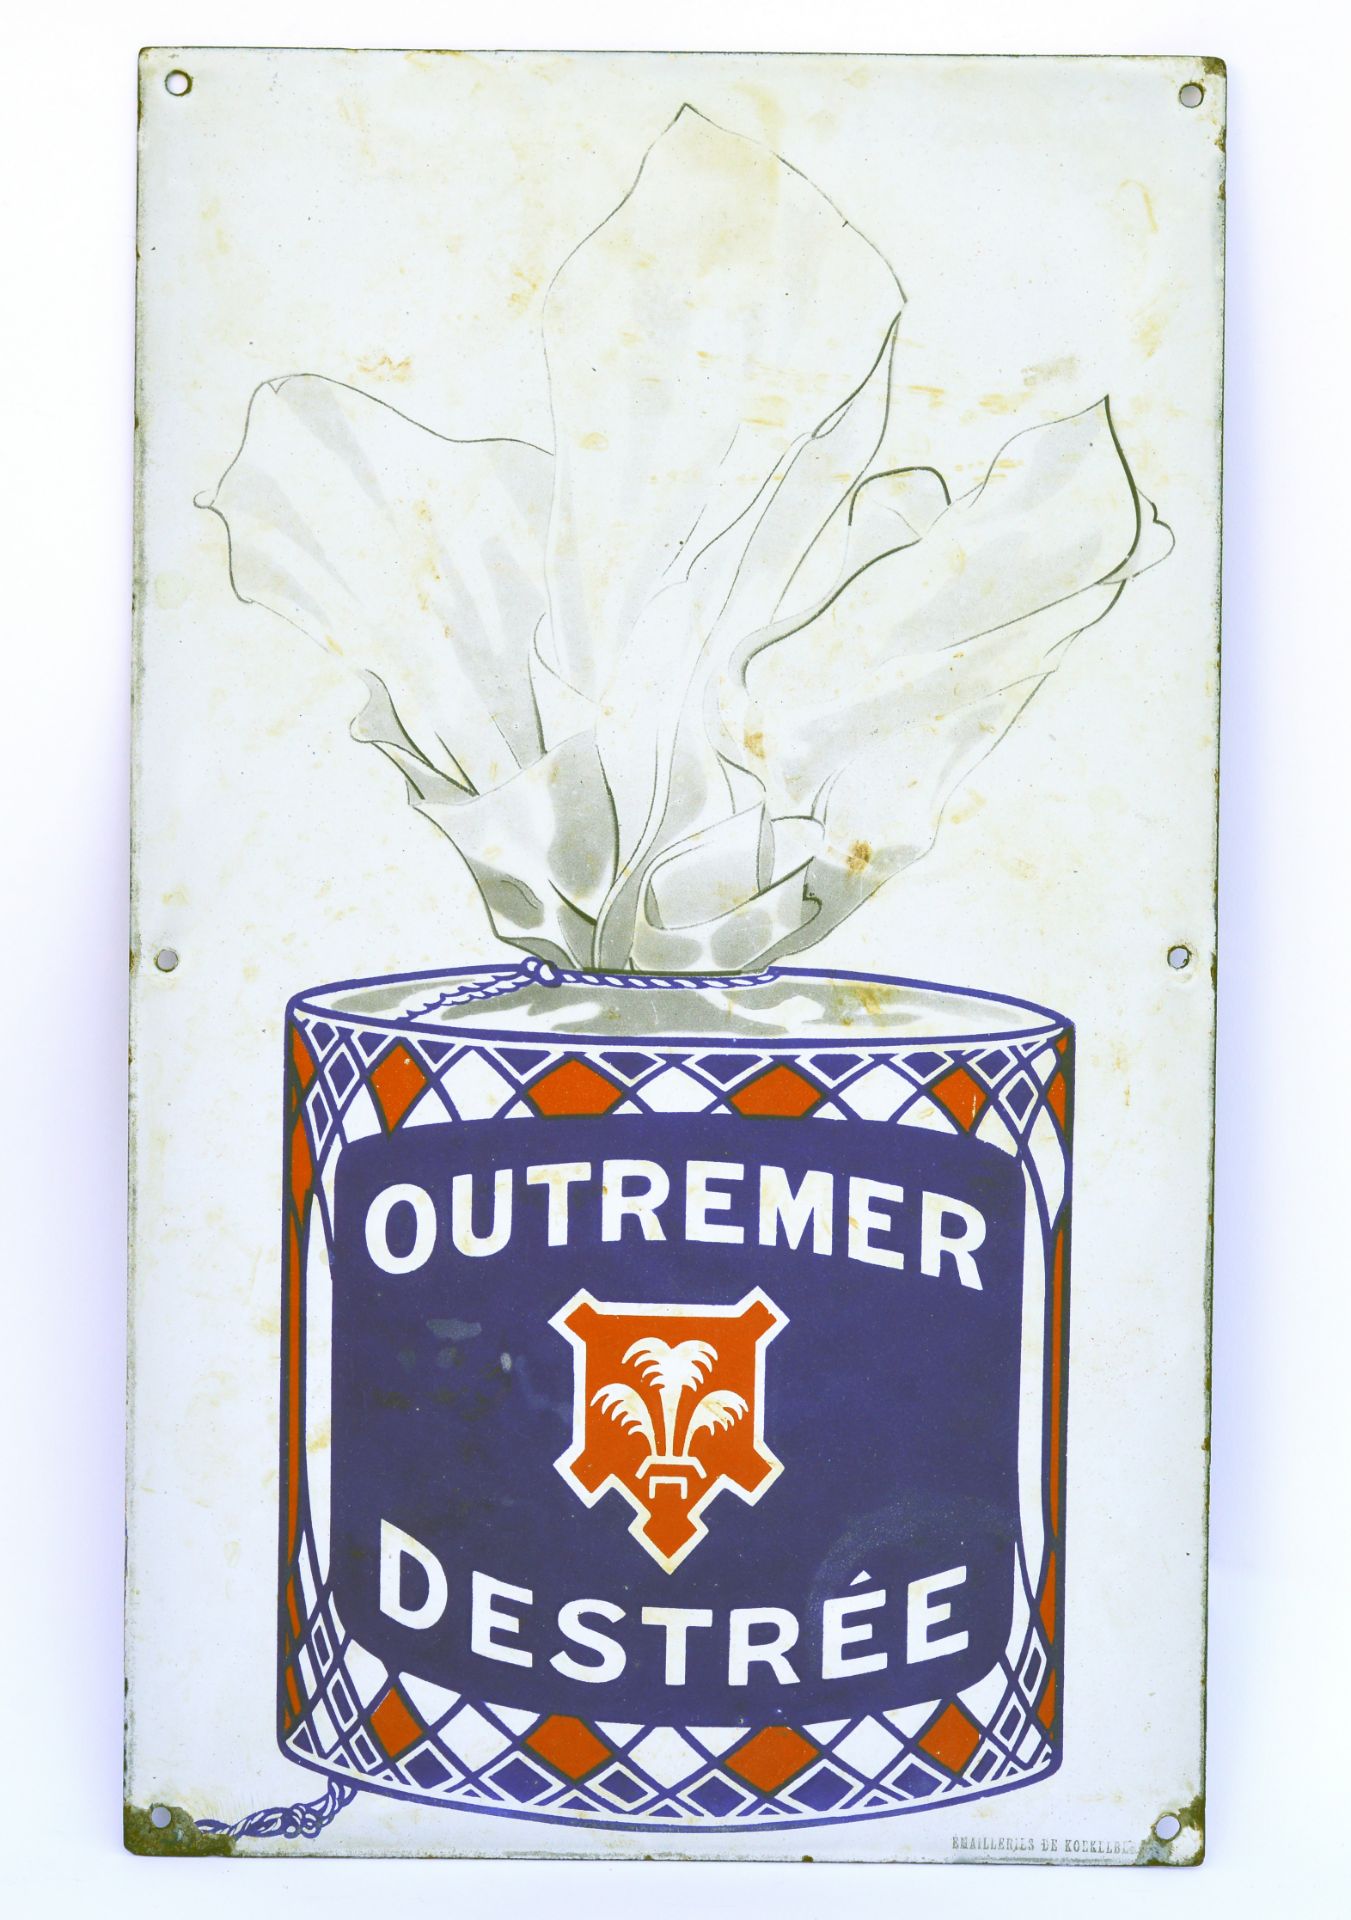 Outremer Destree, enamel sign (flat), 30 x 50 cm, C 2